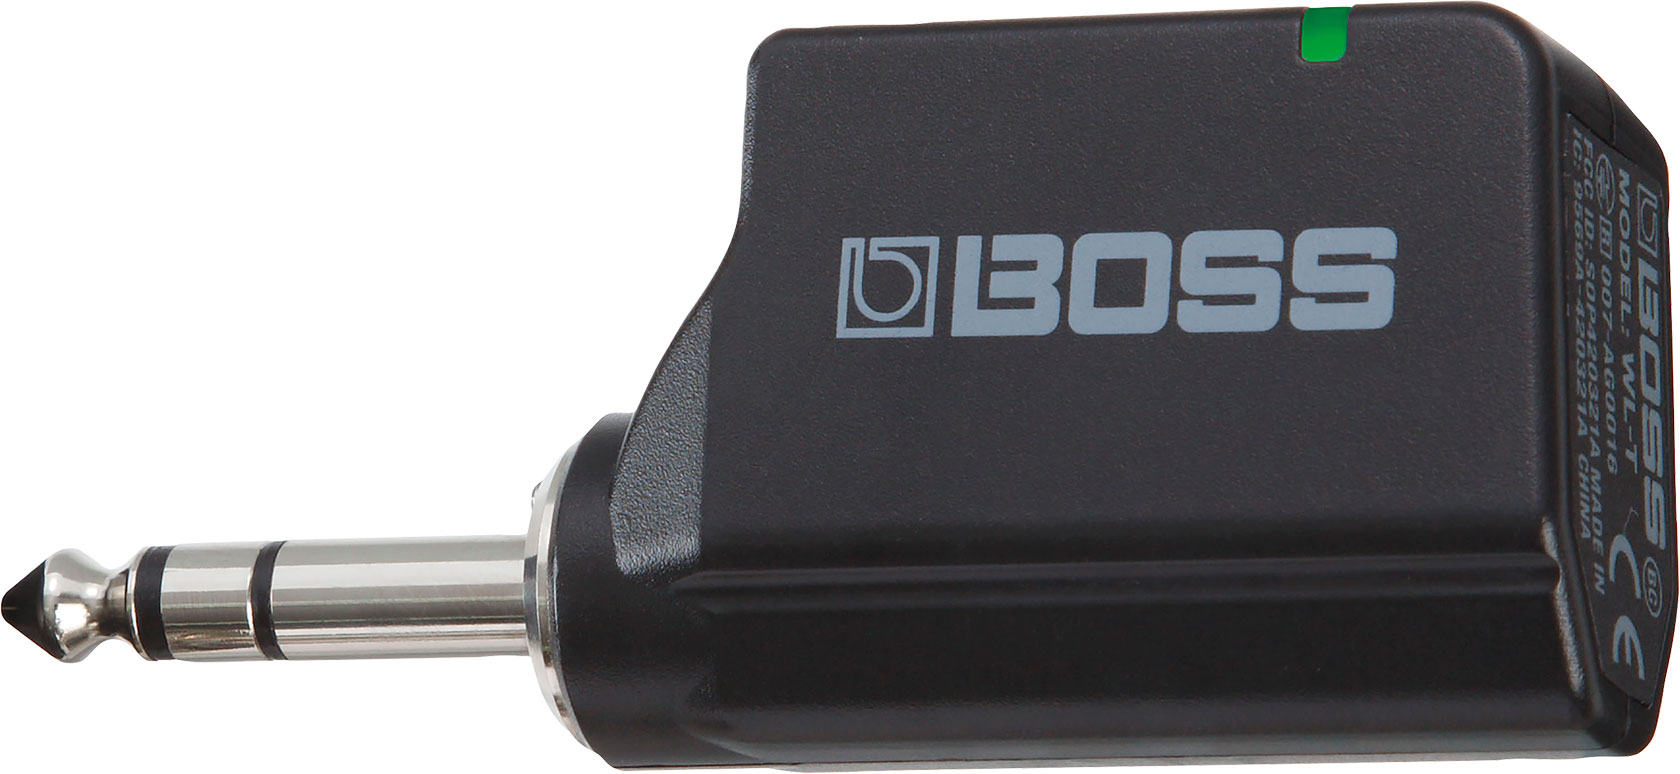 Boss Wl-t Wireless Transmitter - Draadloze audiozender - Variation 1